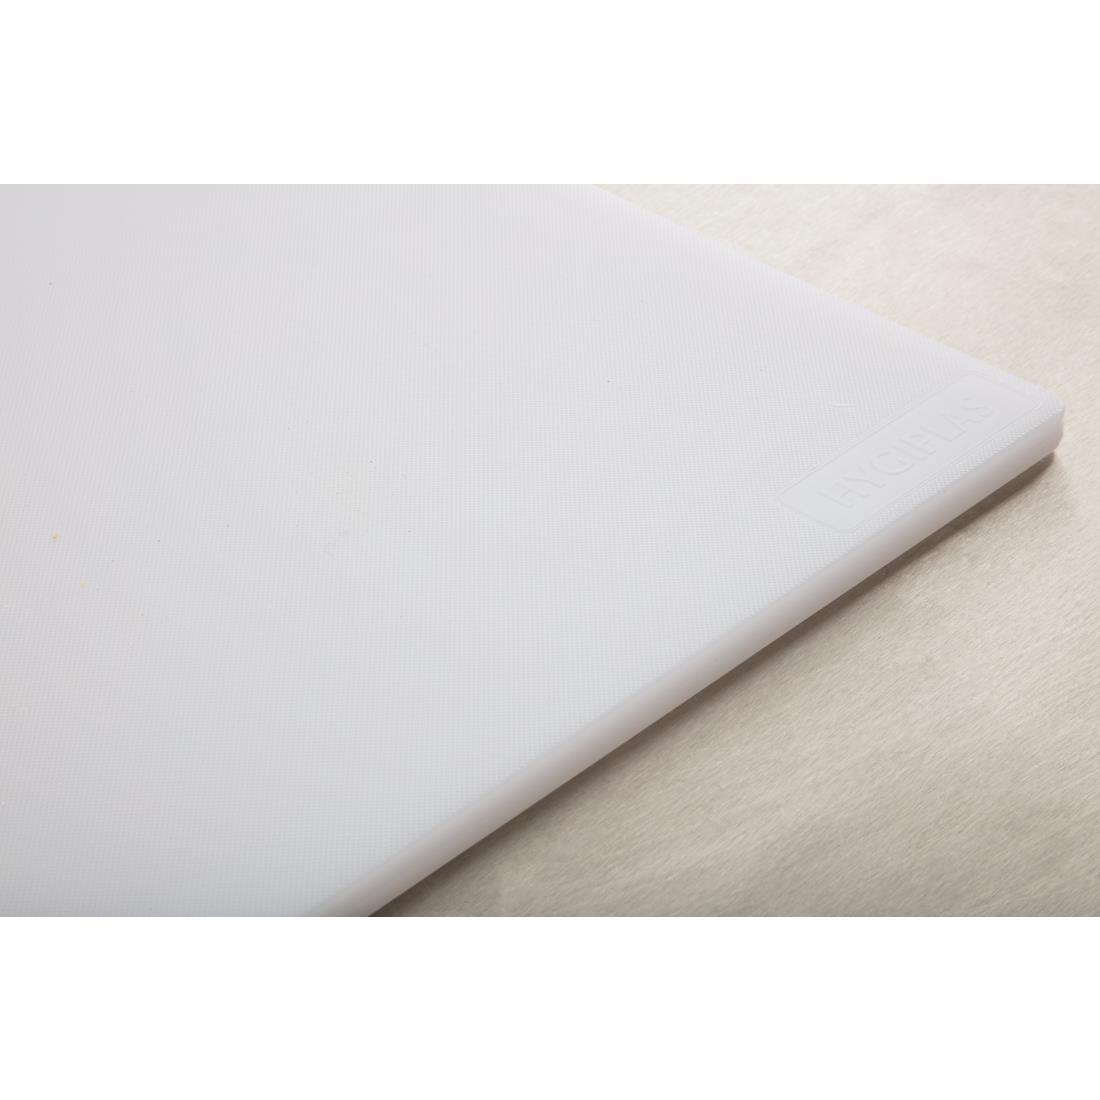 Hygiplas Low Density White Chopping Board Standard - J252  - 6